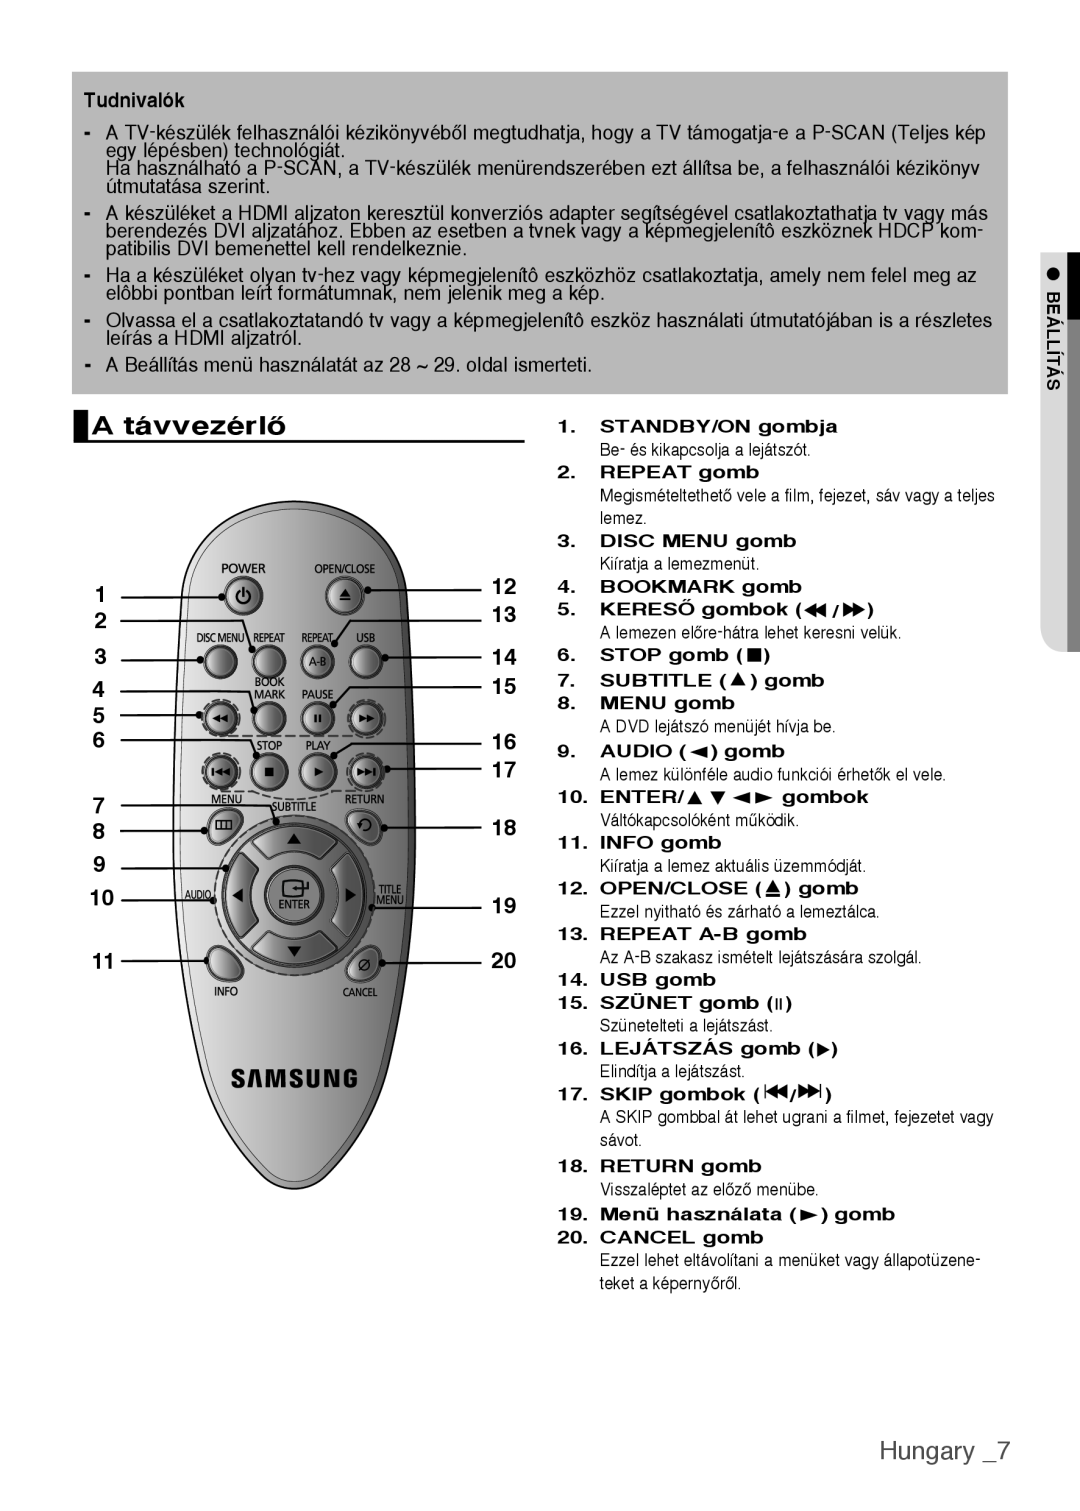 Samsung DVD-H1080W/XEE, DVD-H1080/EDC, DVD-H1080W/EDC, DVD-H1080/XET manual A távvezérlŒ, Hungary , Tudnivalók 